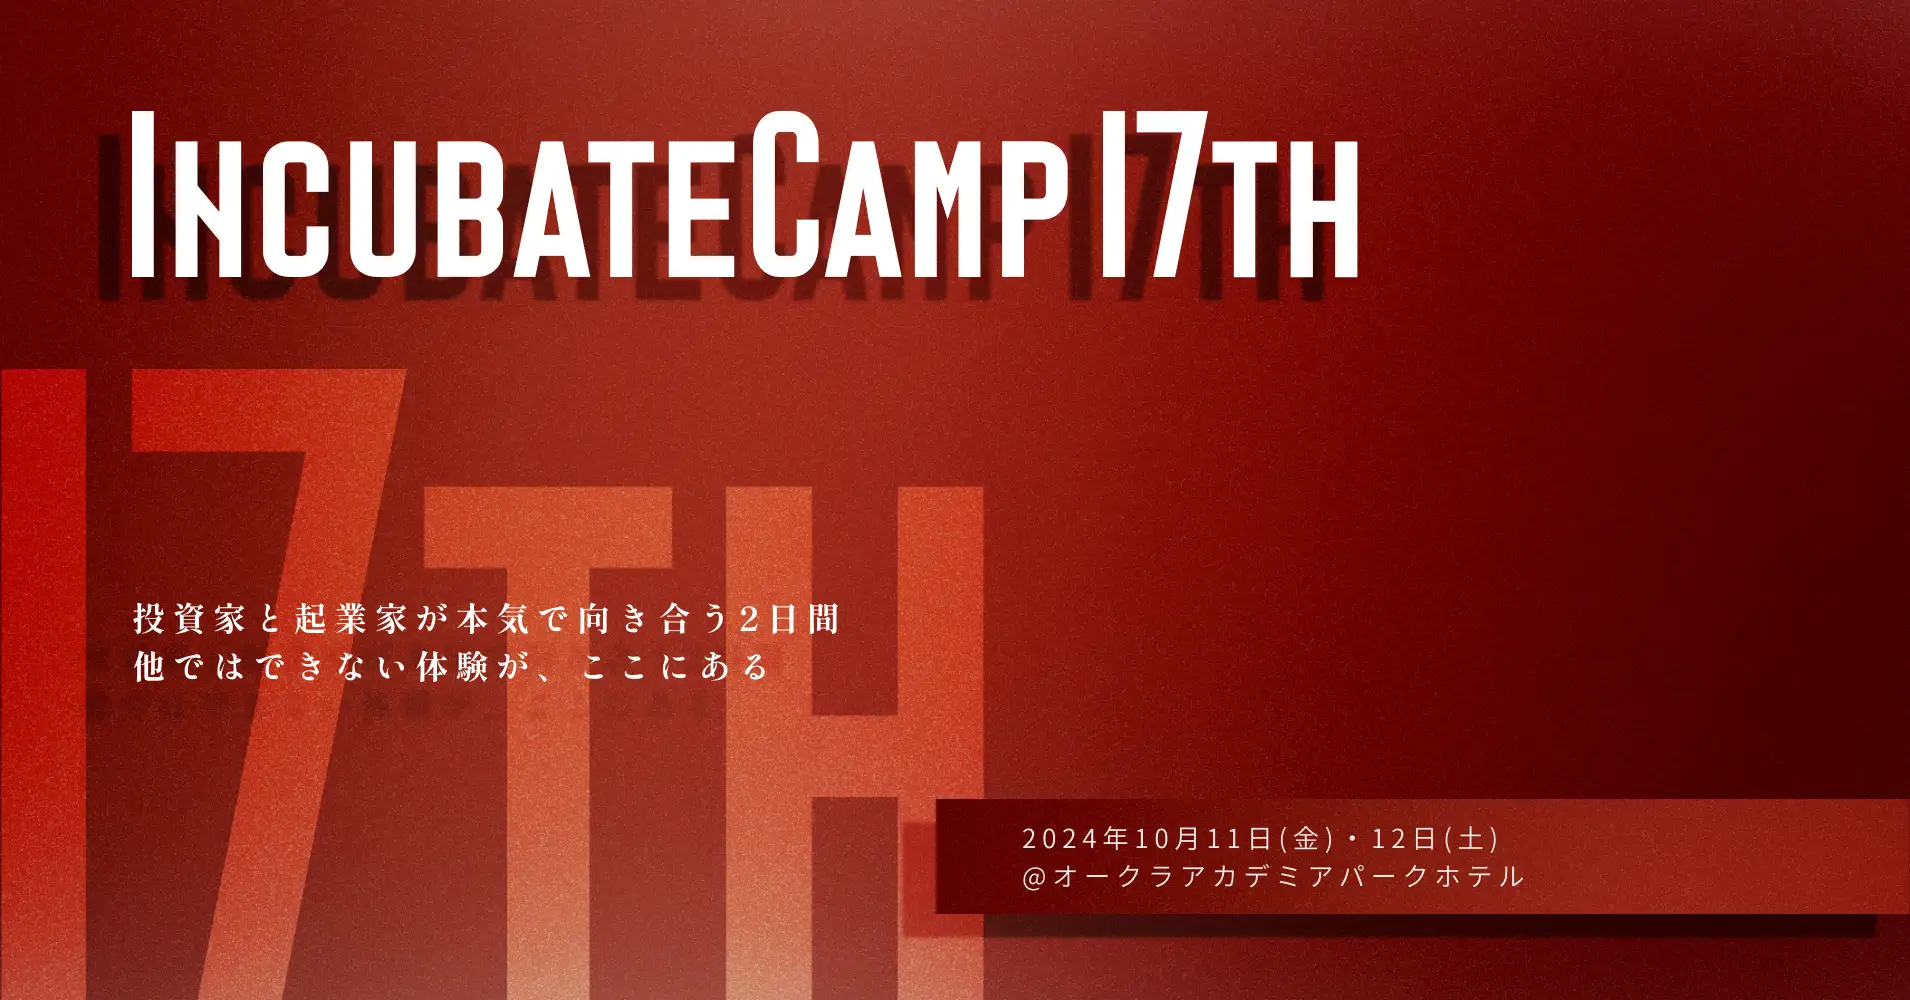 『Incubate Camp 17th』を2024年10月11日(金)・12日(土)に開催！本日4月1日(月)よりエントリー受付開始